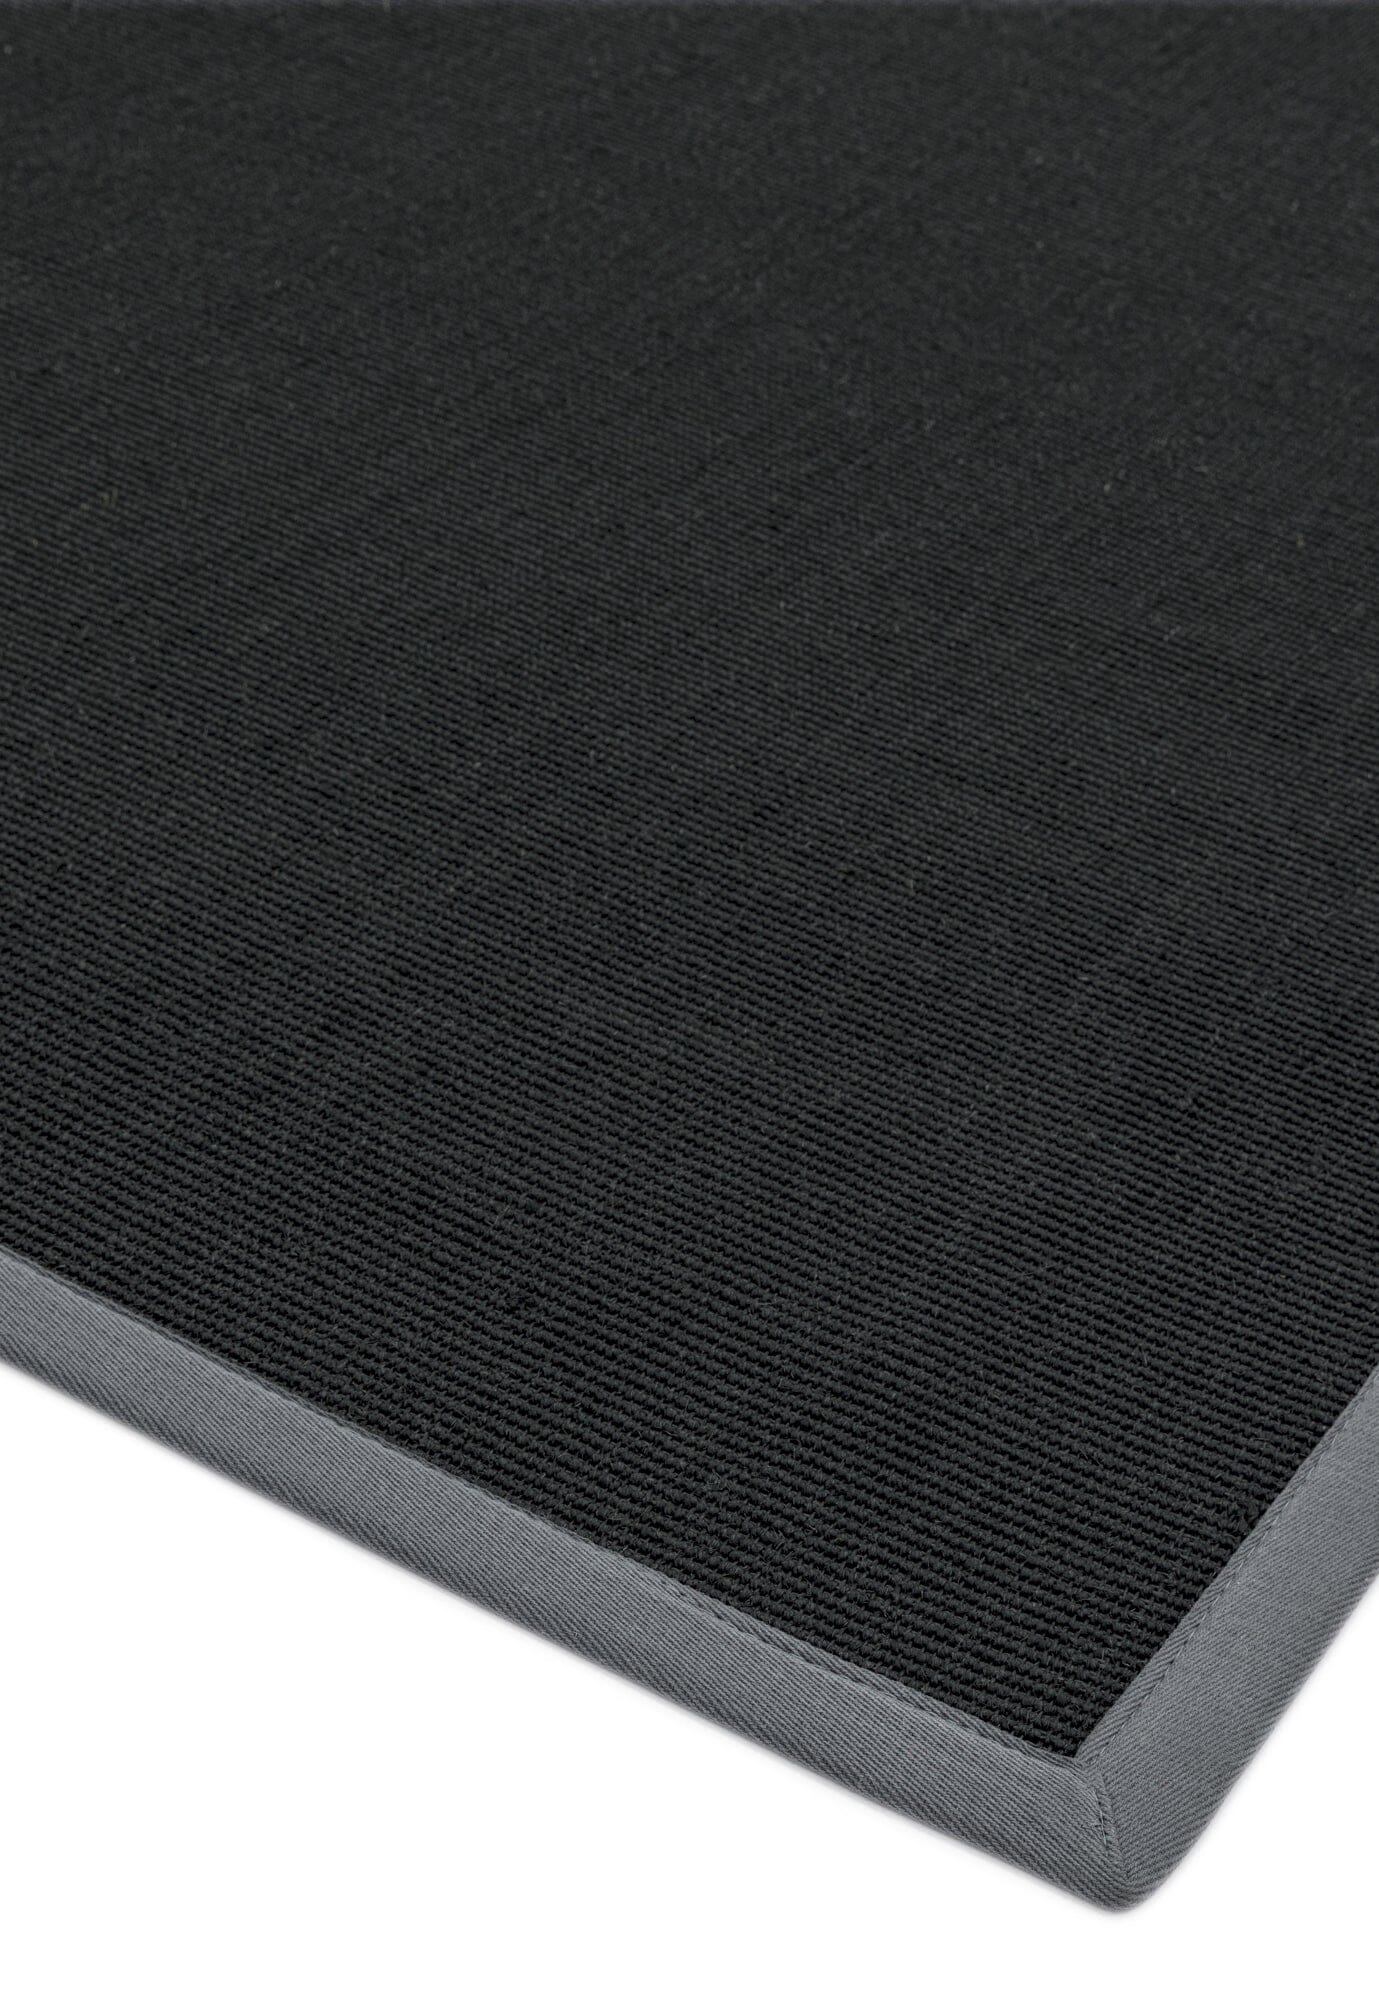  Asiatic Carpets-Asiatic Carpets Sisal Machine Woven Rug Black/Grey - 240 x 340cm-Black 613 